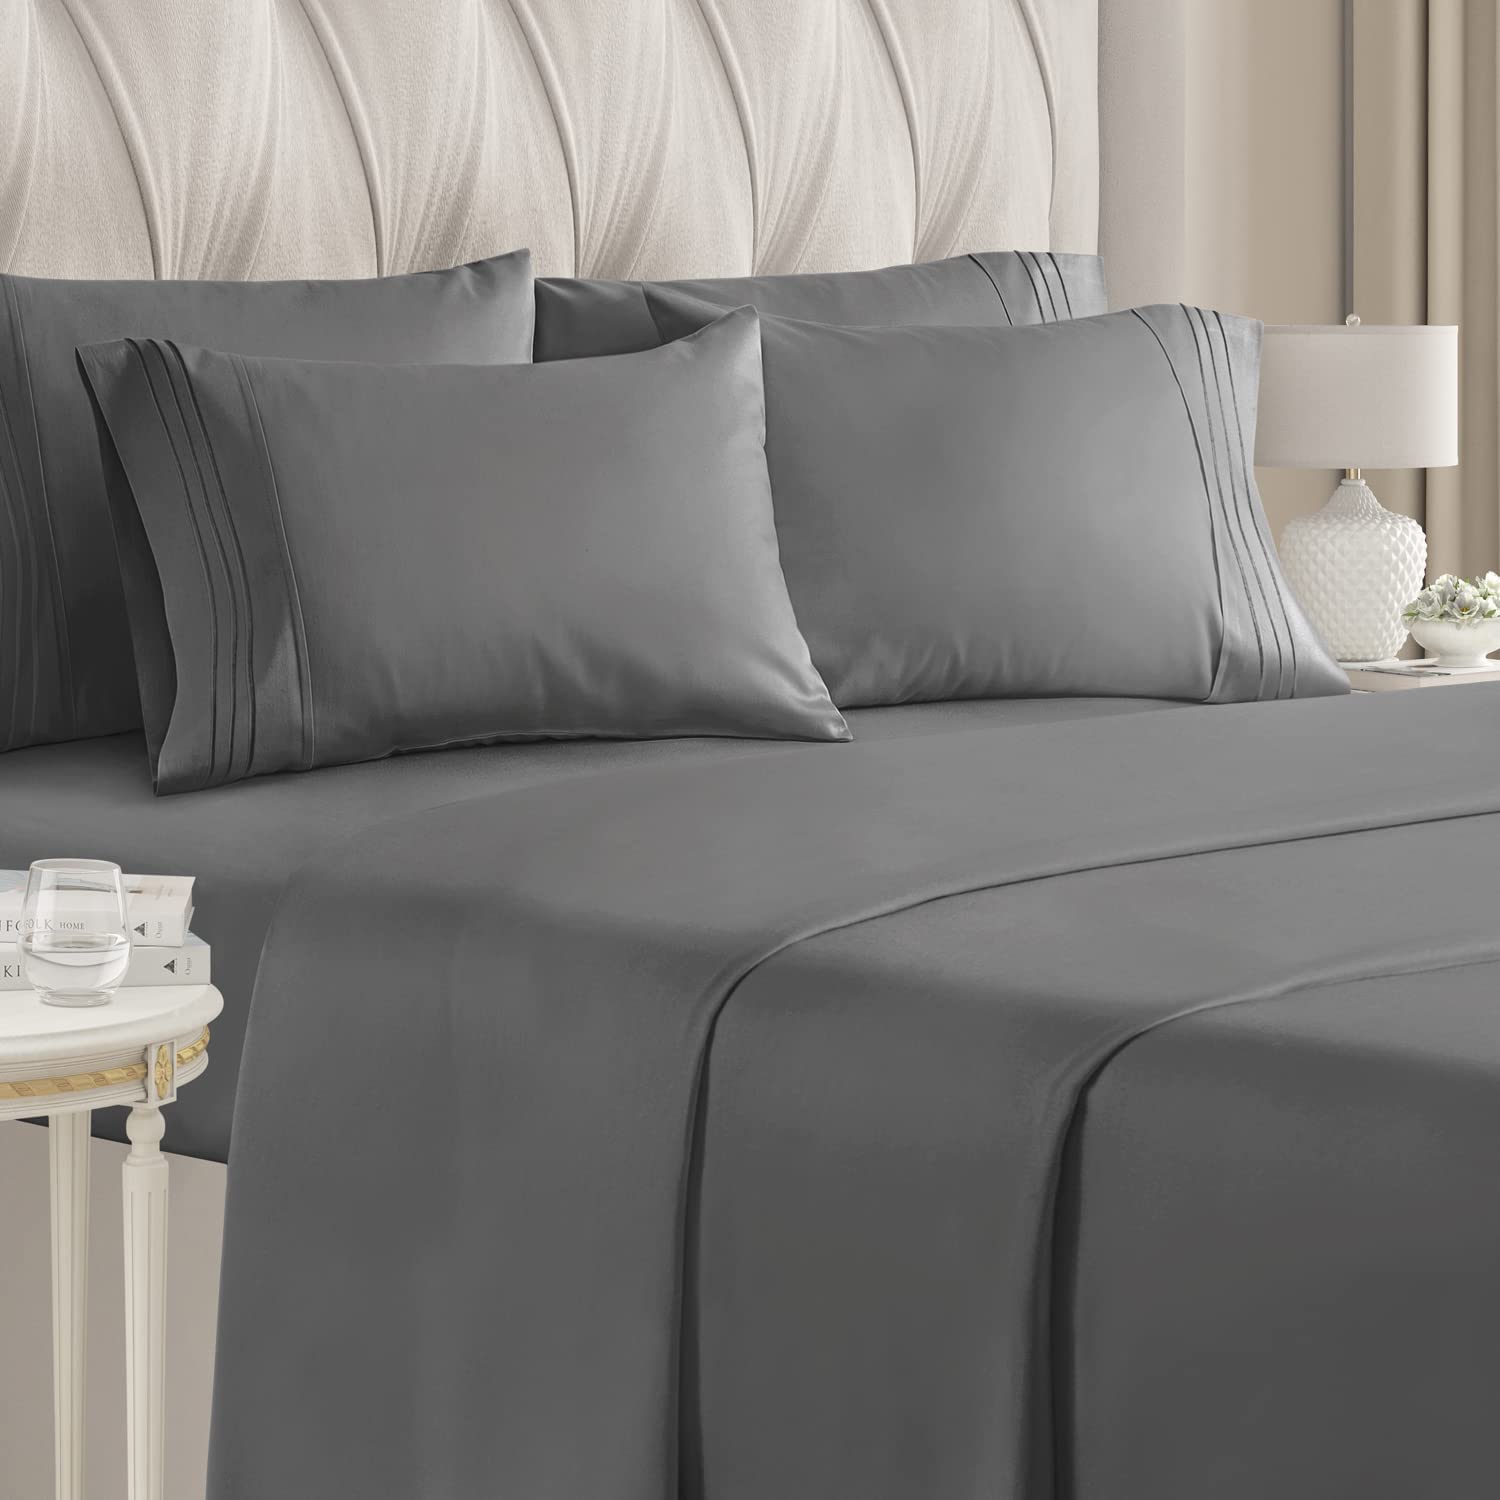 4 Piece Bed Sheet Set 100% Egyptian Cotton 1000-TC 8 Inch Deep Pocket Dark Grey Color